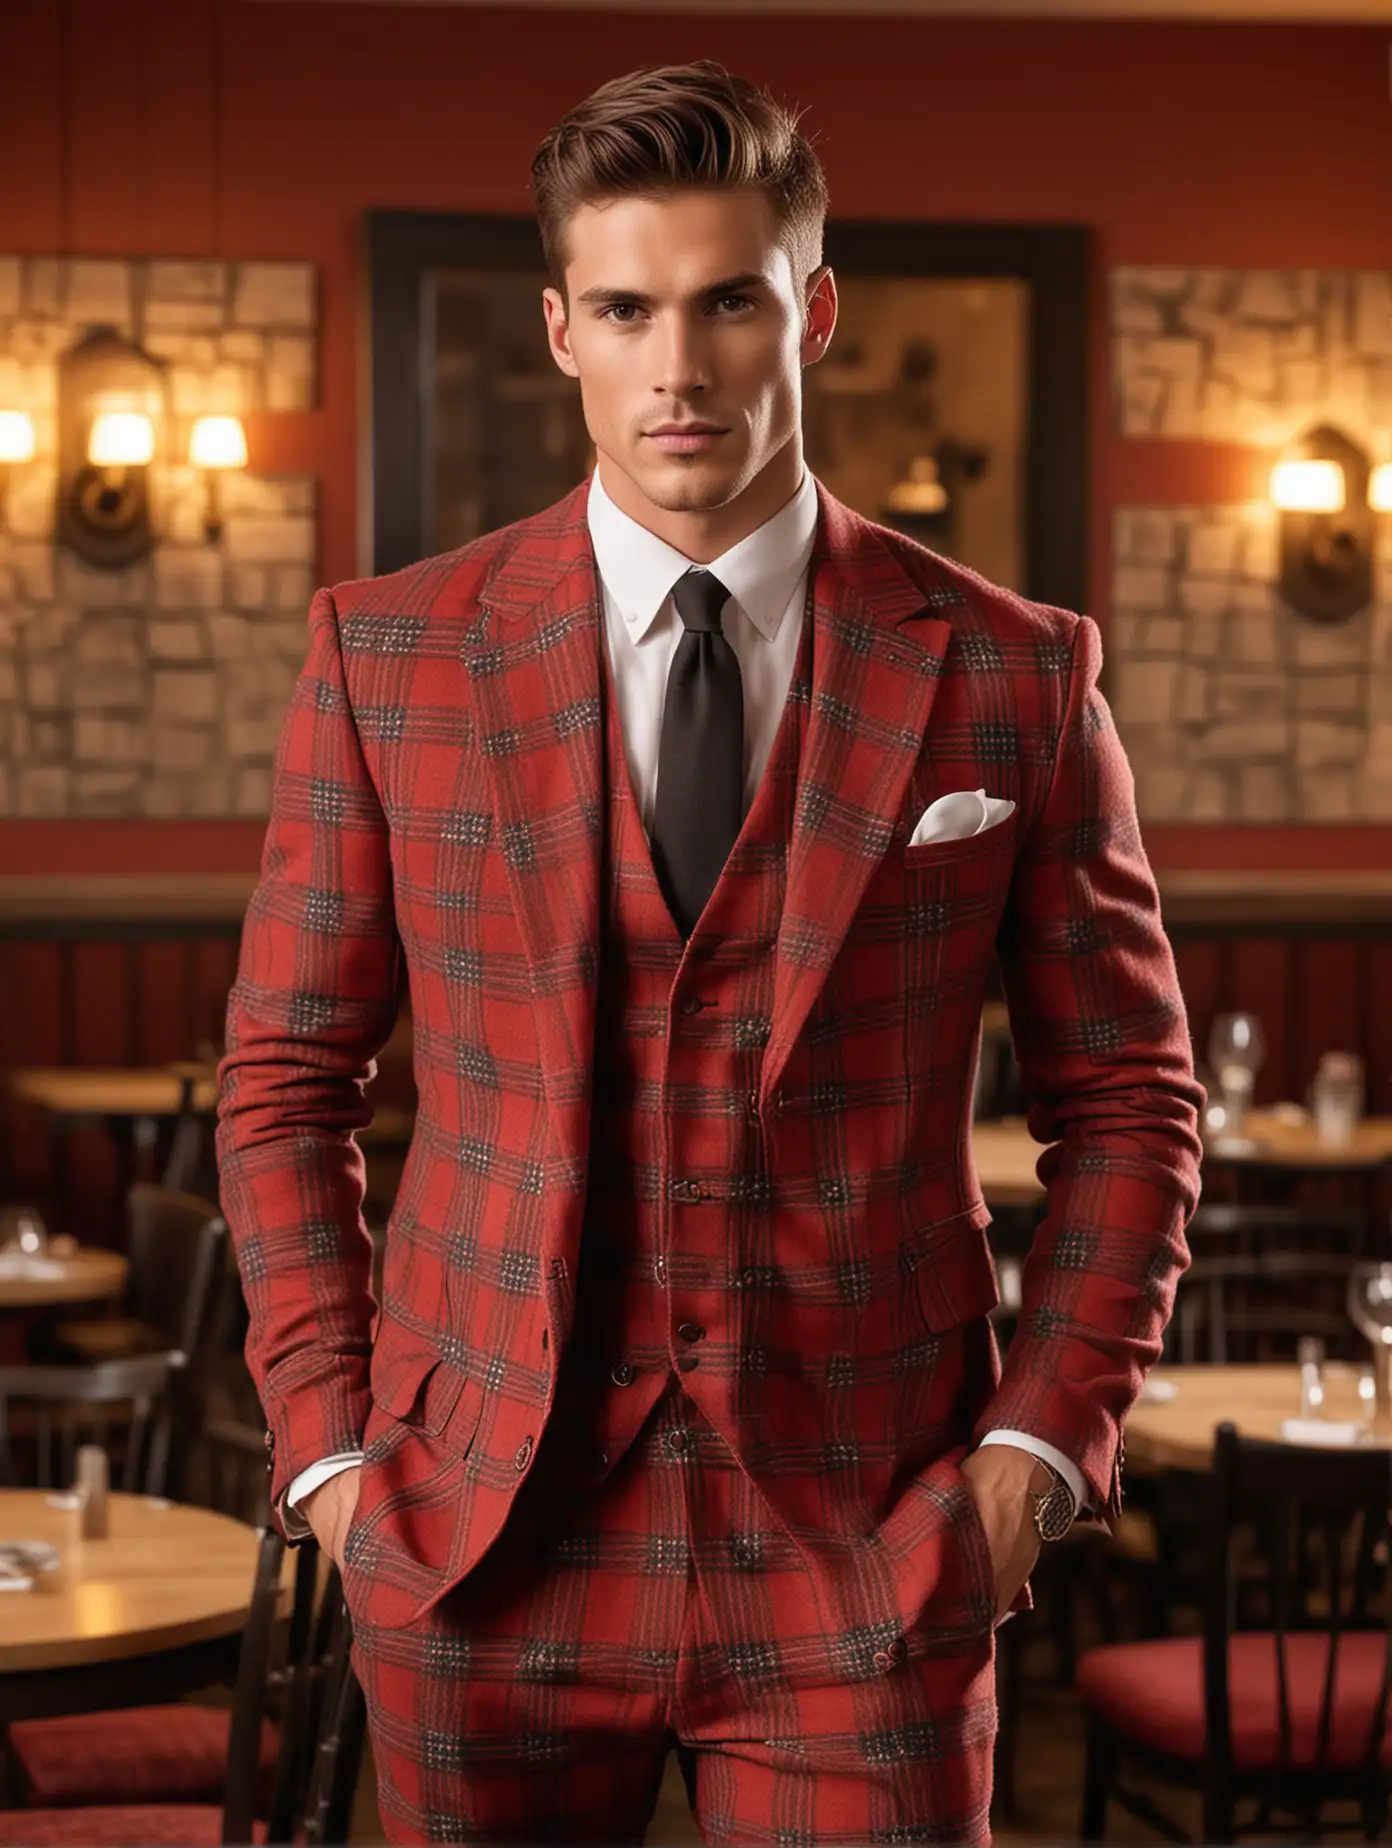 Confident British Male Model in Elegant Red Plaid Suit at Western Restaurant